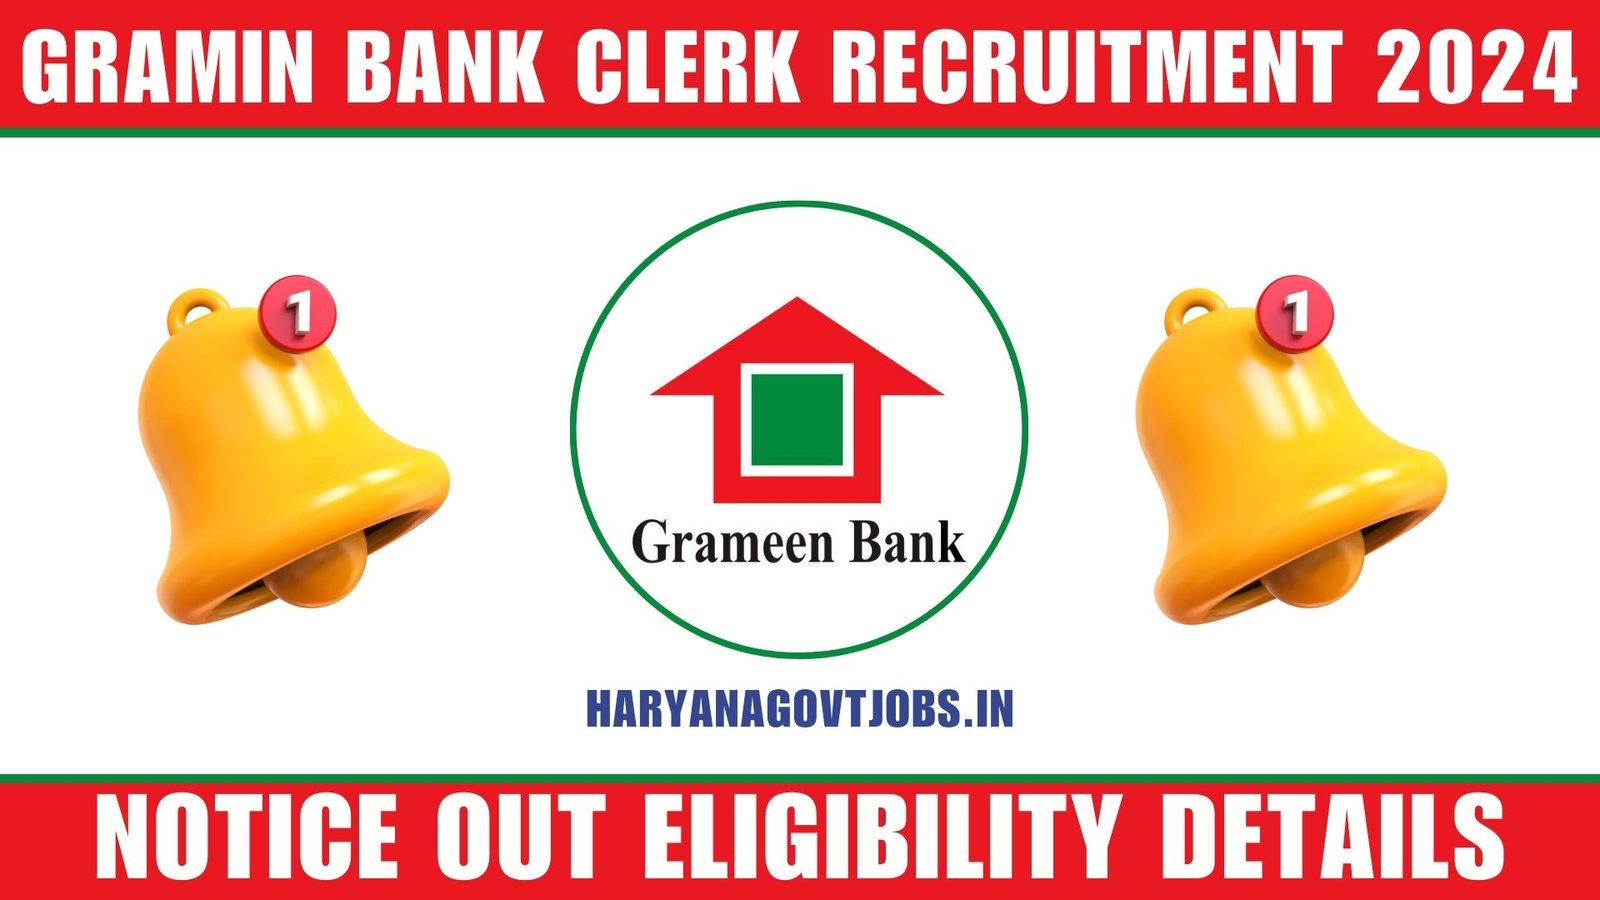 Gramin Bank Clerk Recruitment 2024